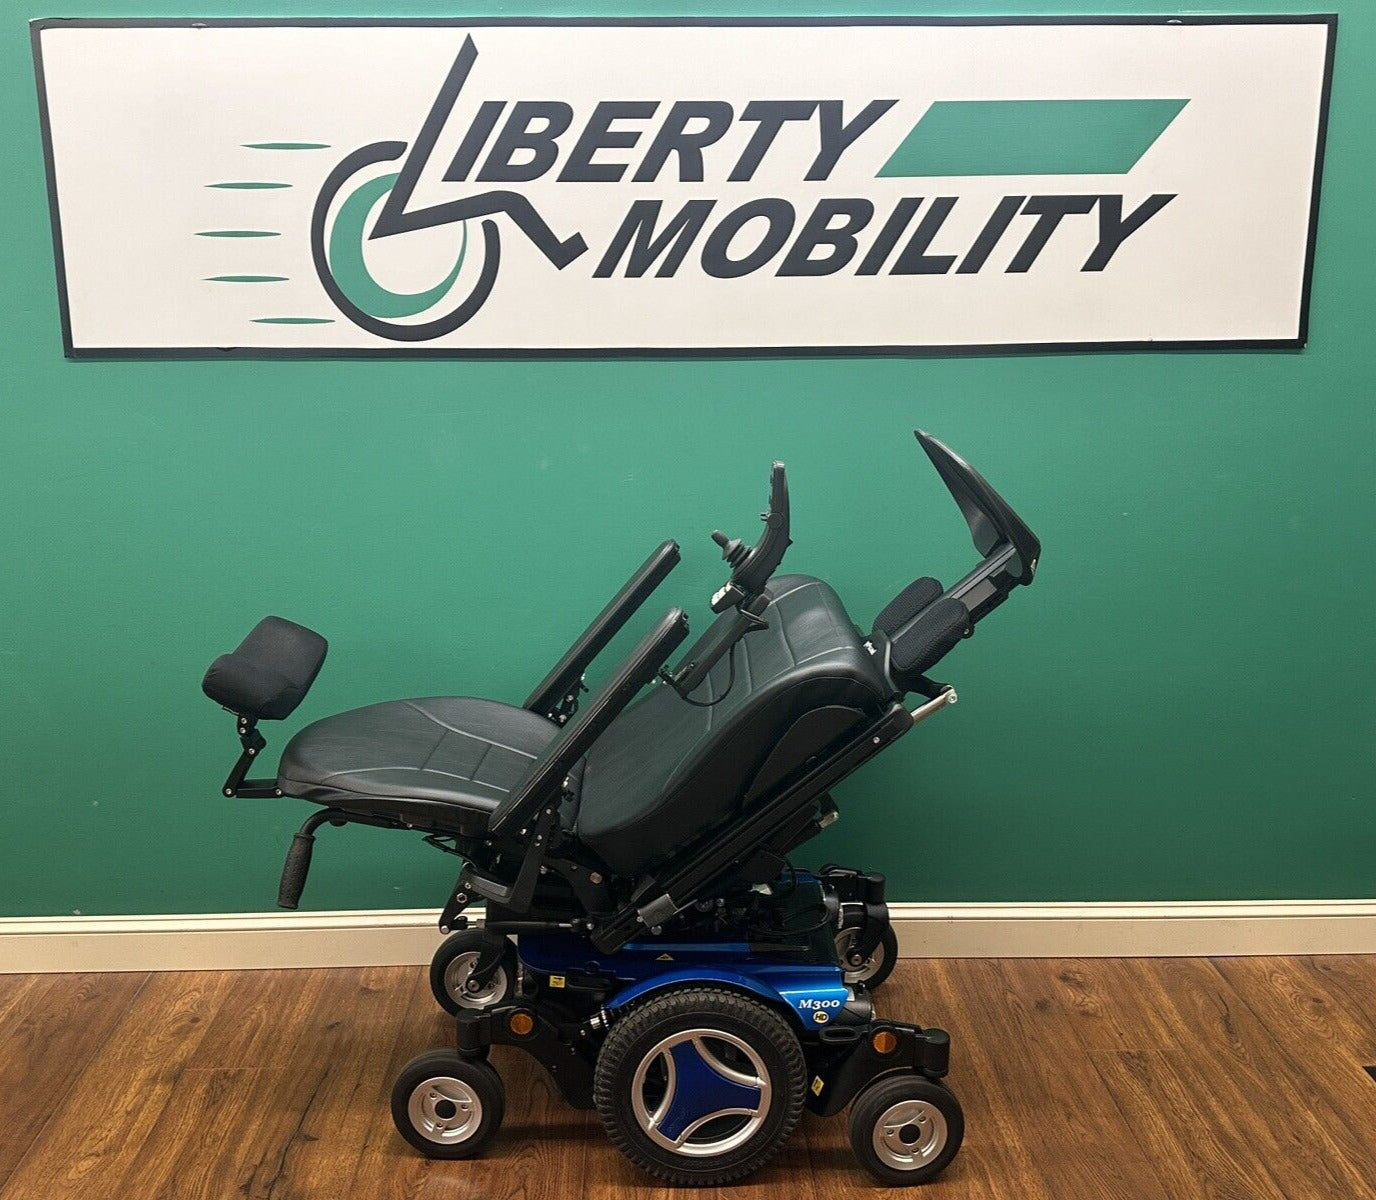 2019 Permobil M300 HD Wheelchair w/ Elevate, Tilt, Recline, Legs 450 LB Capacity